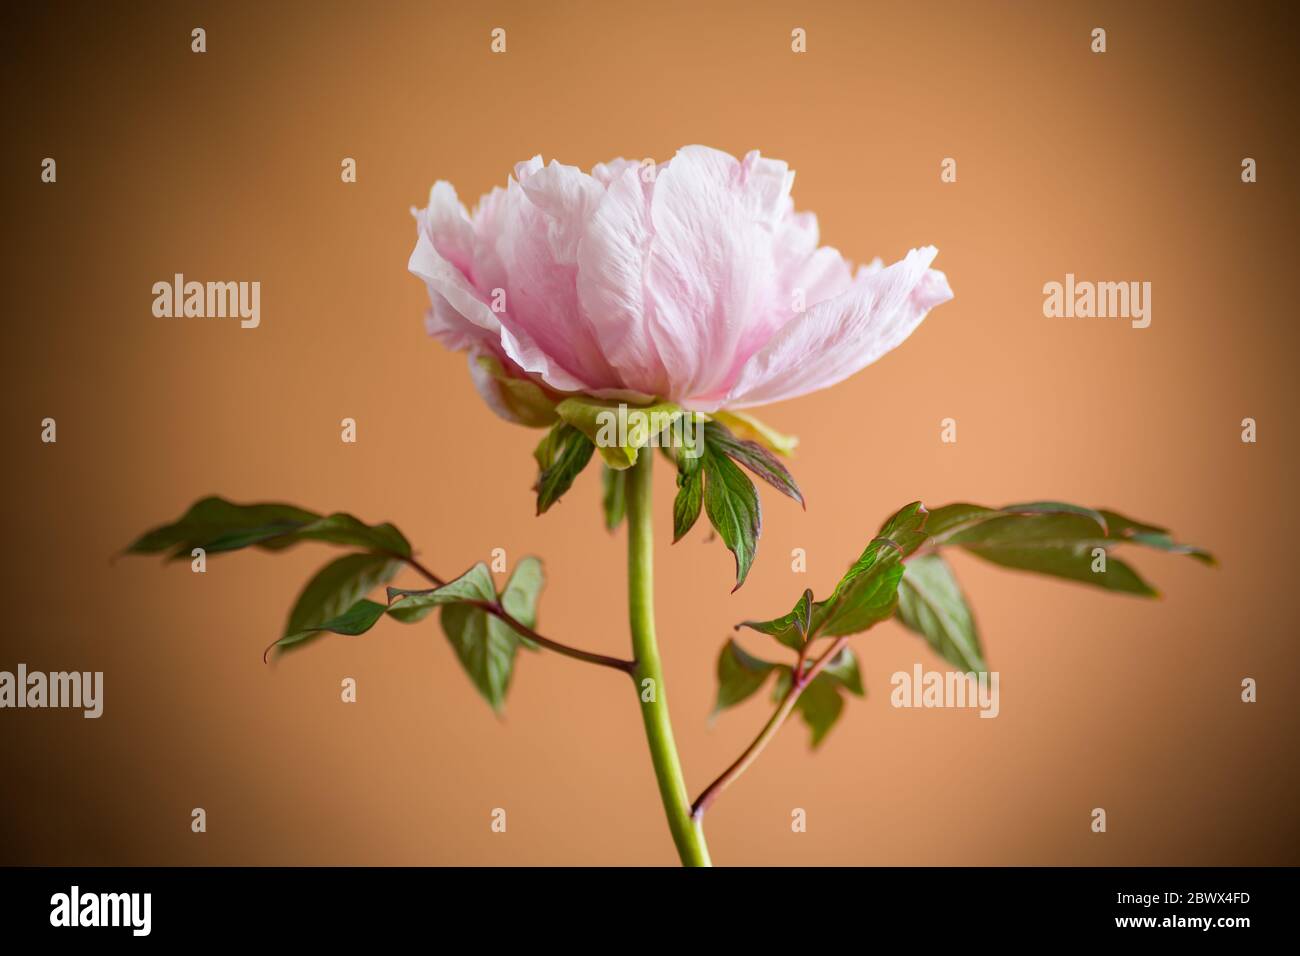 blooming pink tree peony flower on orange background Stock Photo